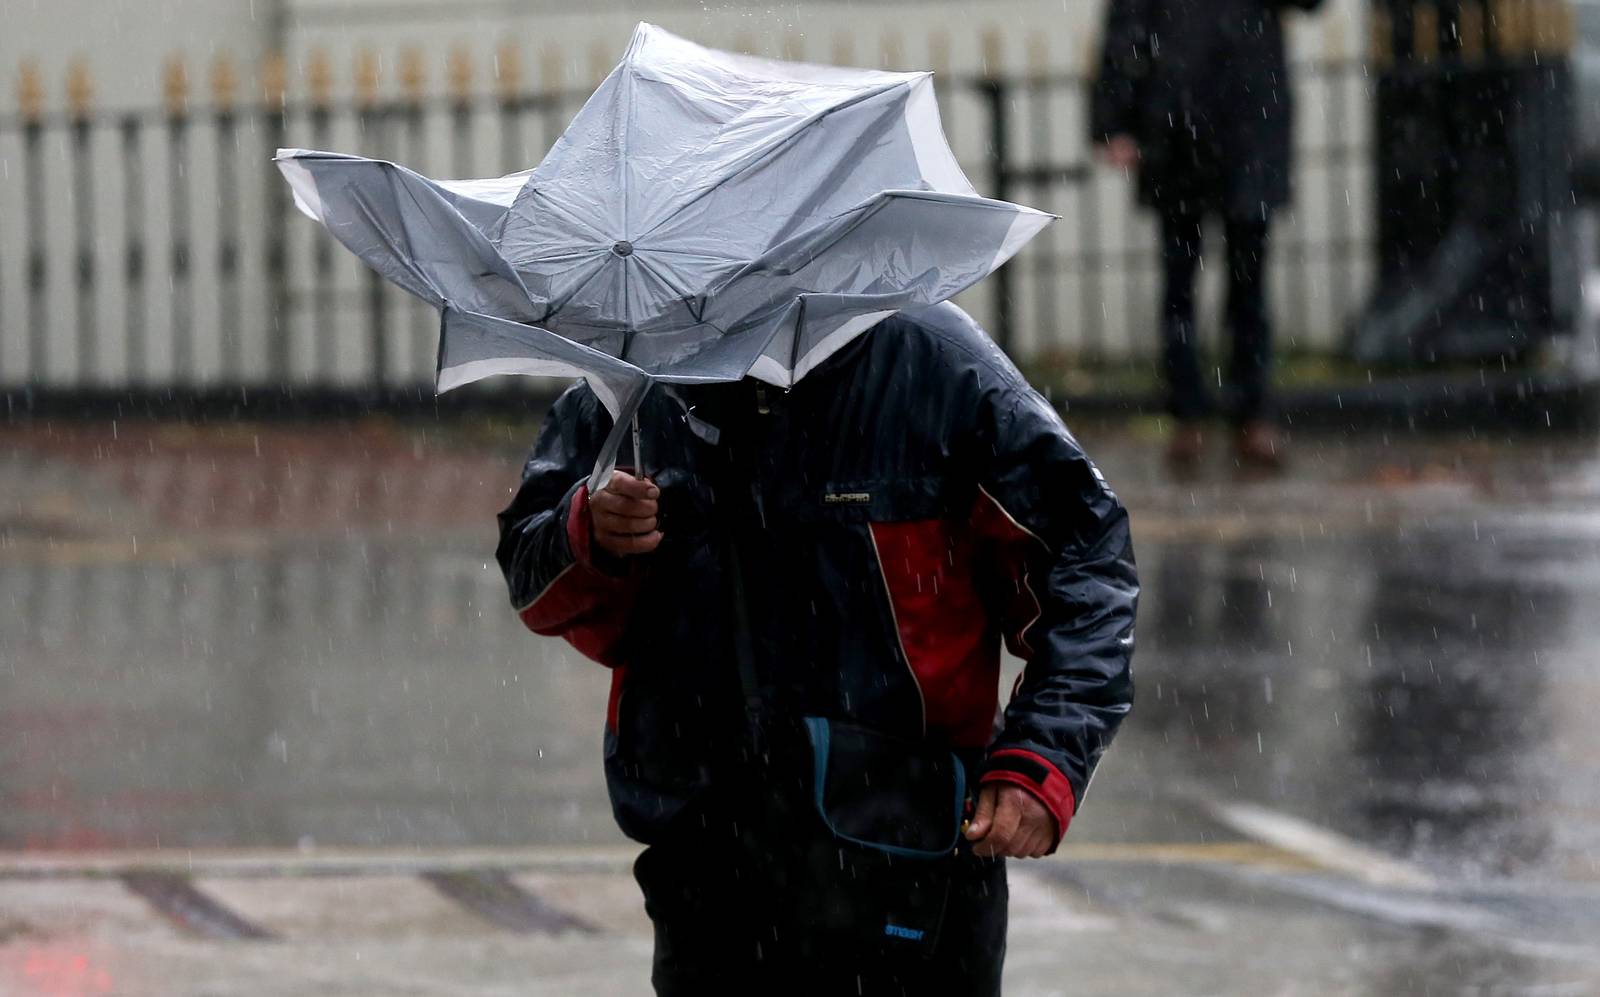 27/11/2018. A man struggles with a broken umbrella during a downpour in Dublin. Photo: Laura Hutton/Collins Photo Agency